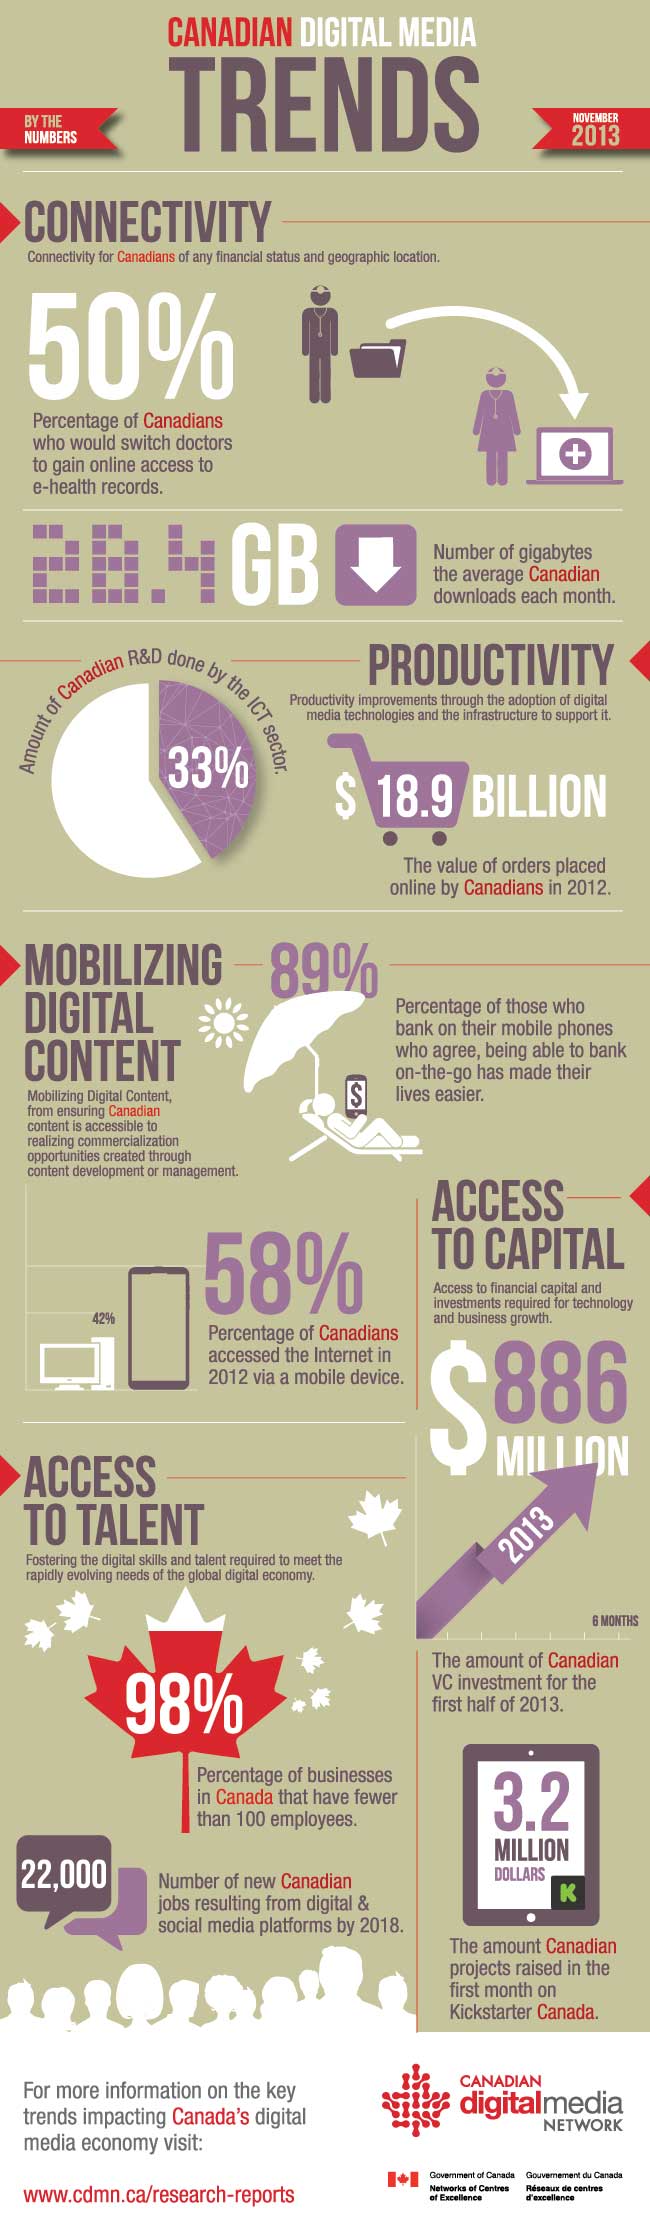 Canadian digital media trends infographic